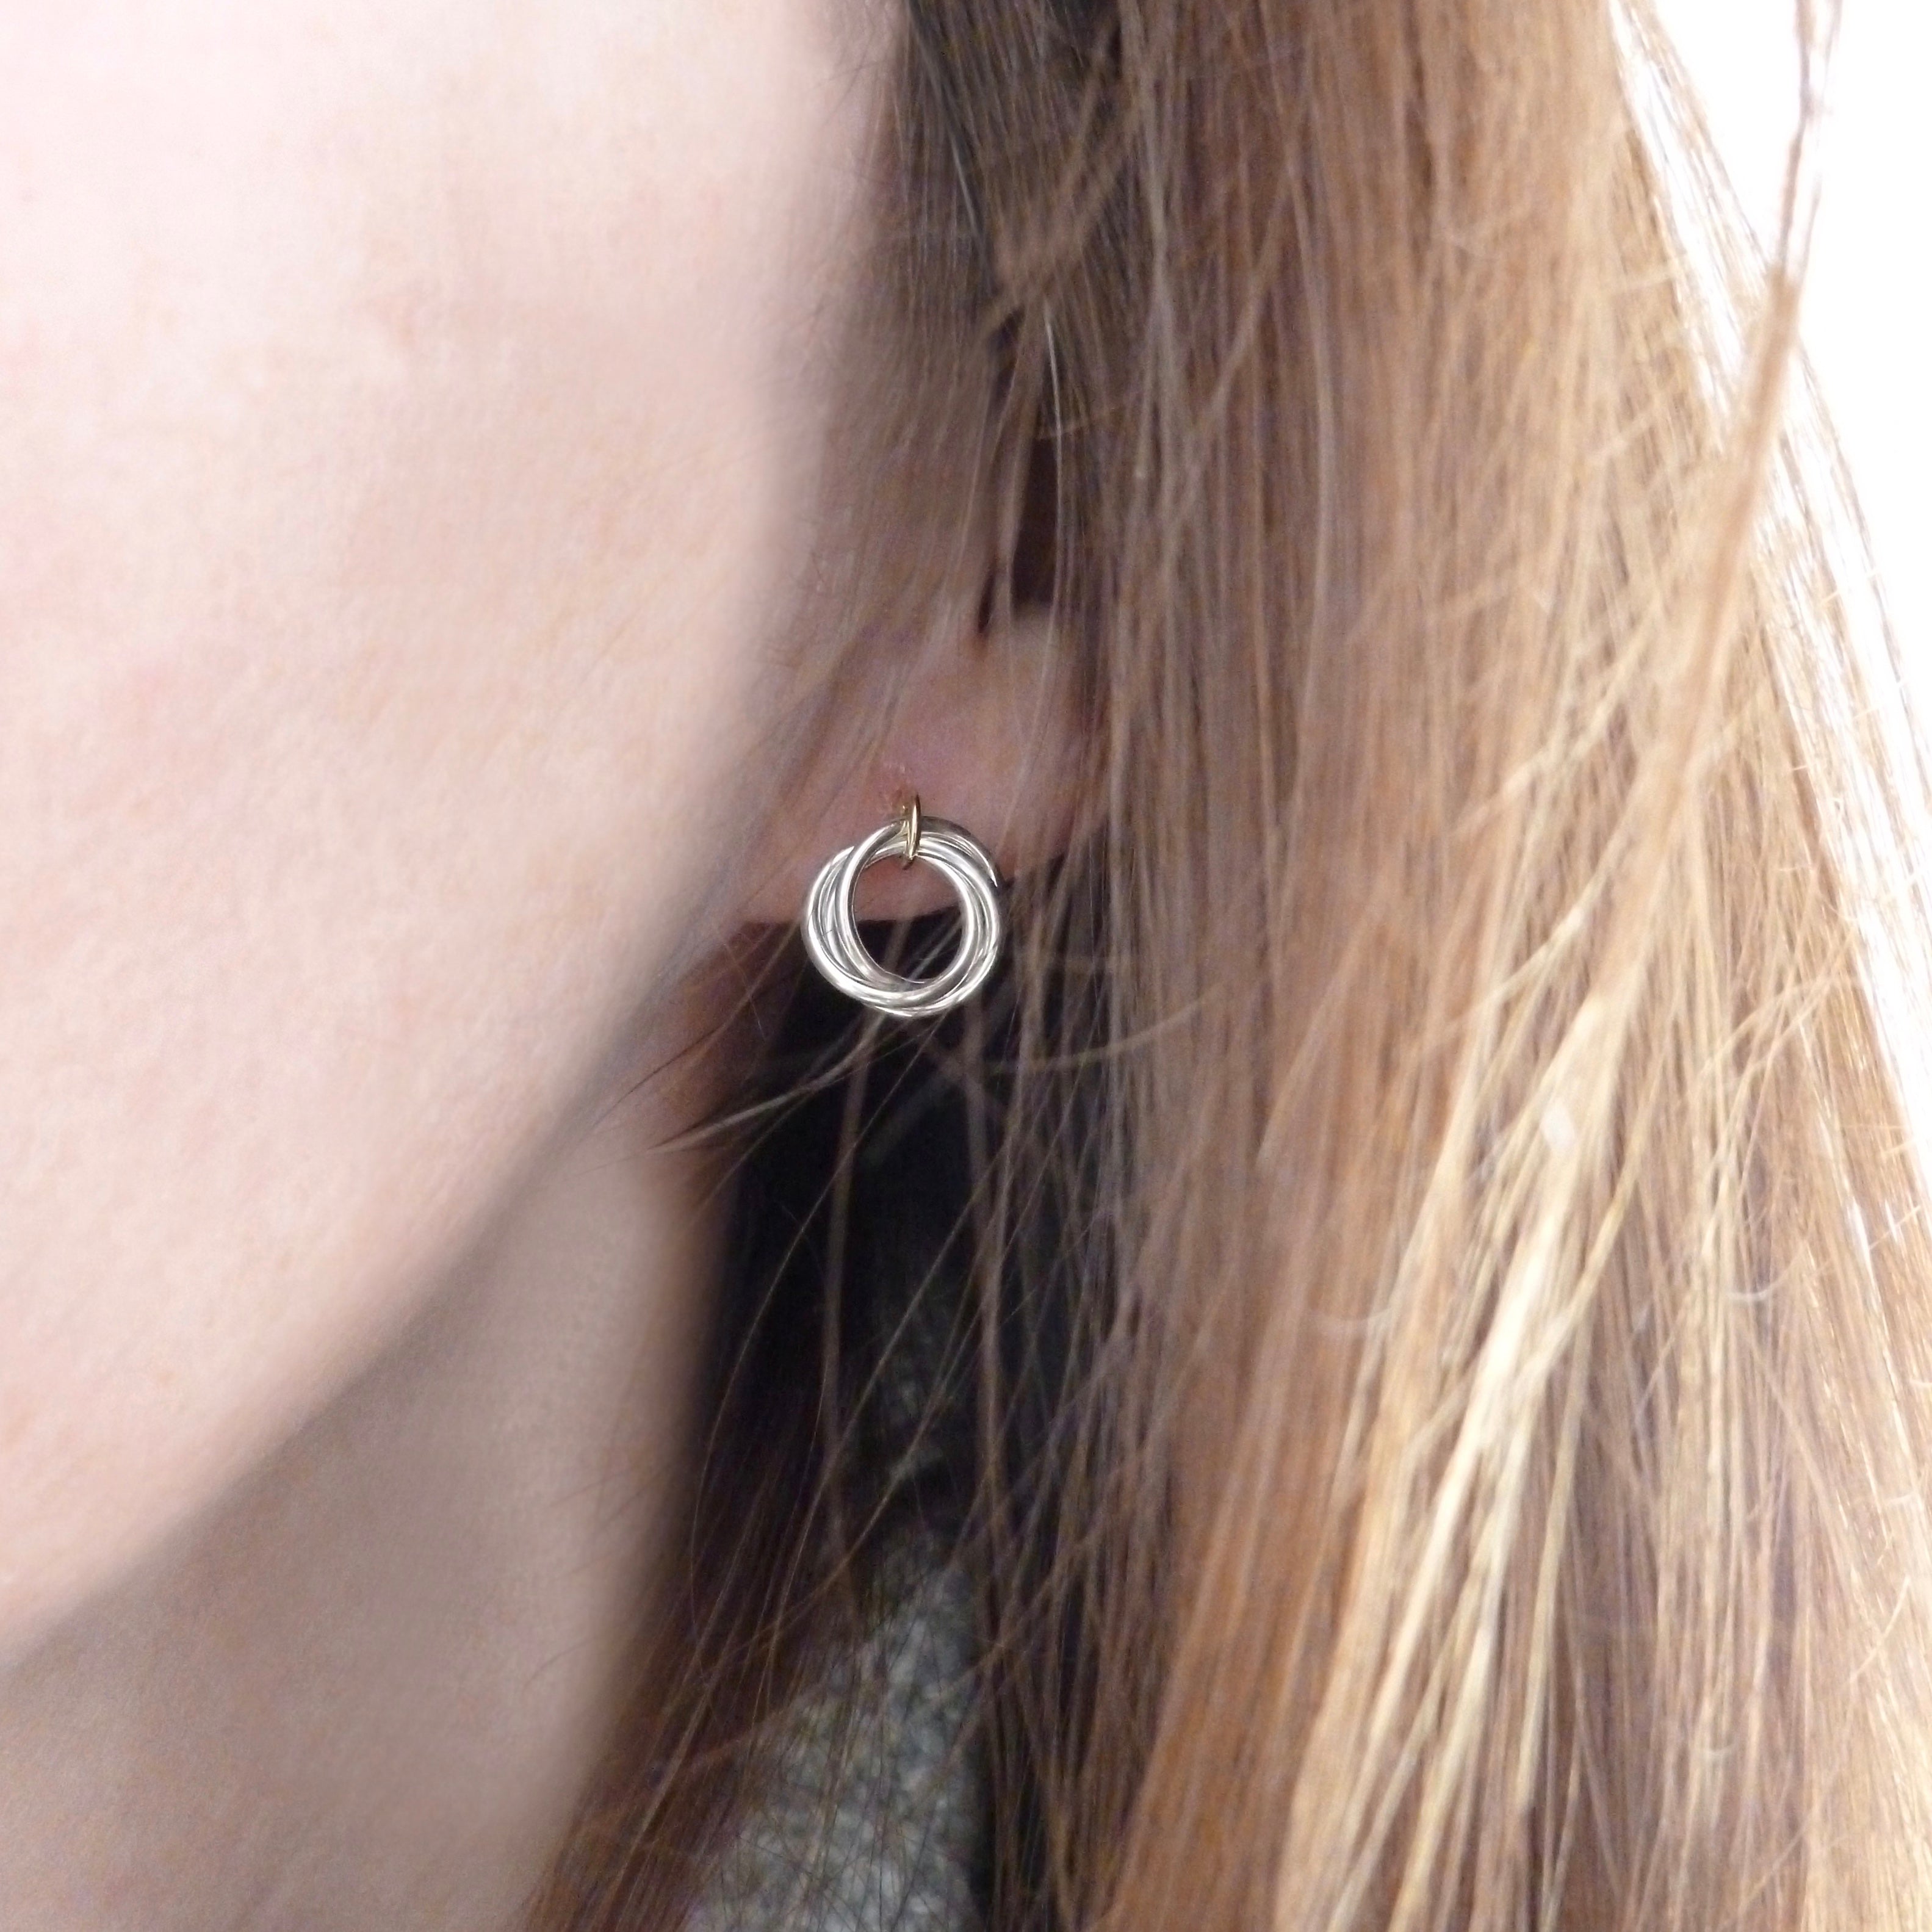 modern and simple two tone handmade circle stud earrings